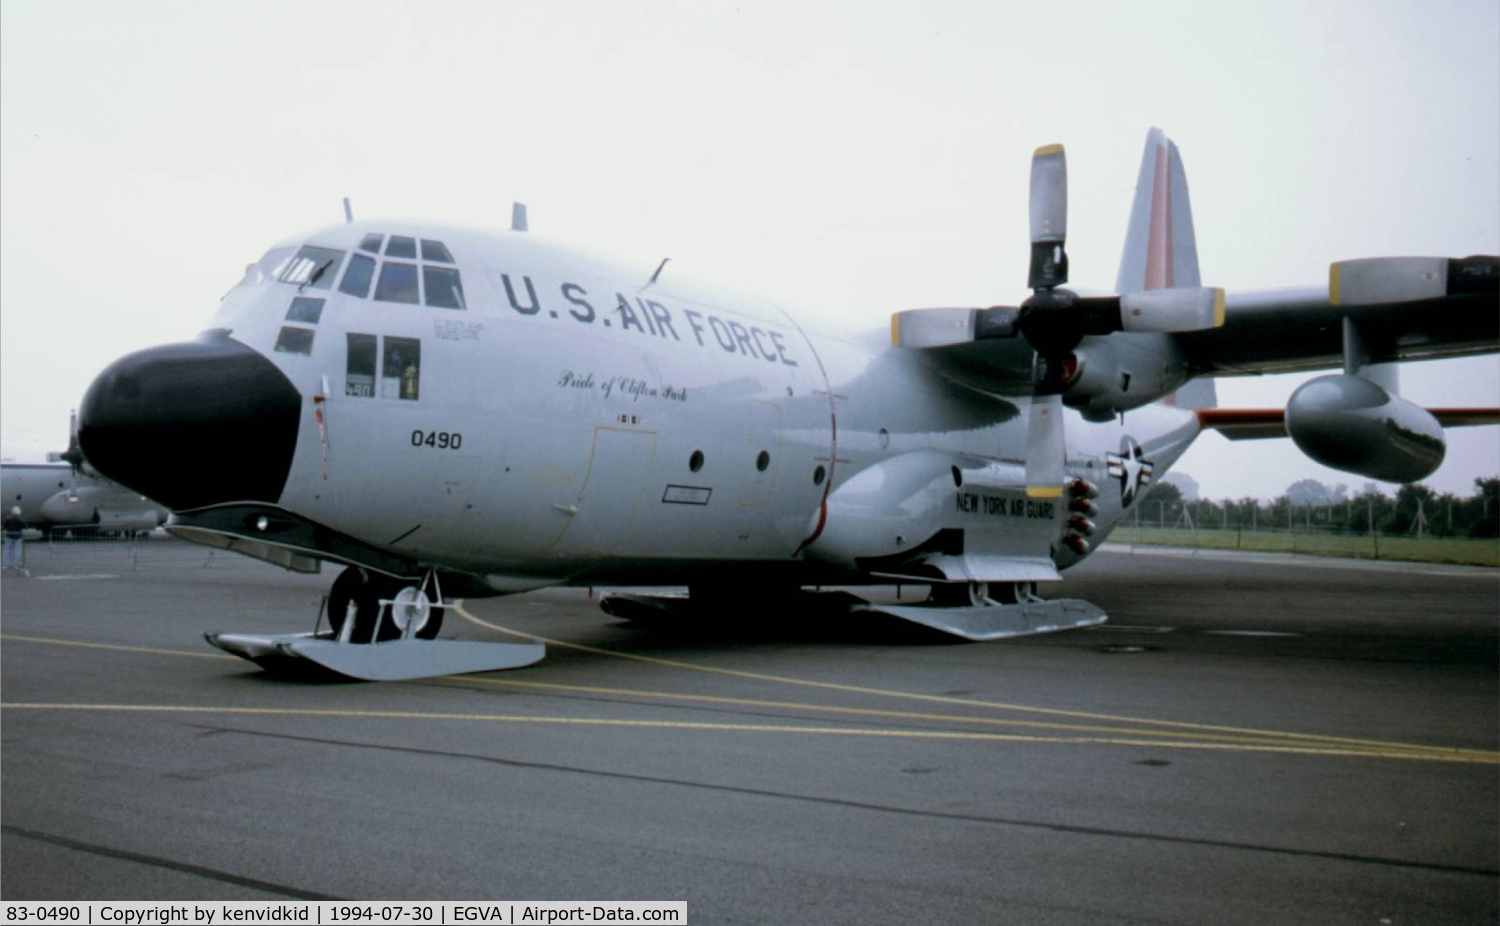 83-0490, 1983 Lockheed LC-130H Hercules C/N 382-5007, US Air Force (New York ANG) on static display at RIAT.